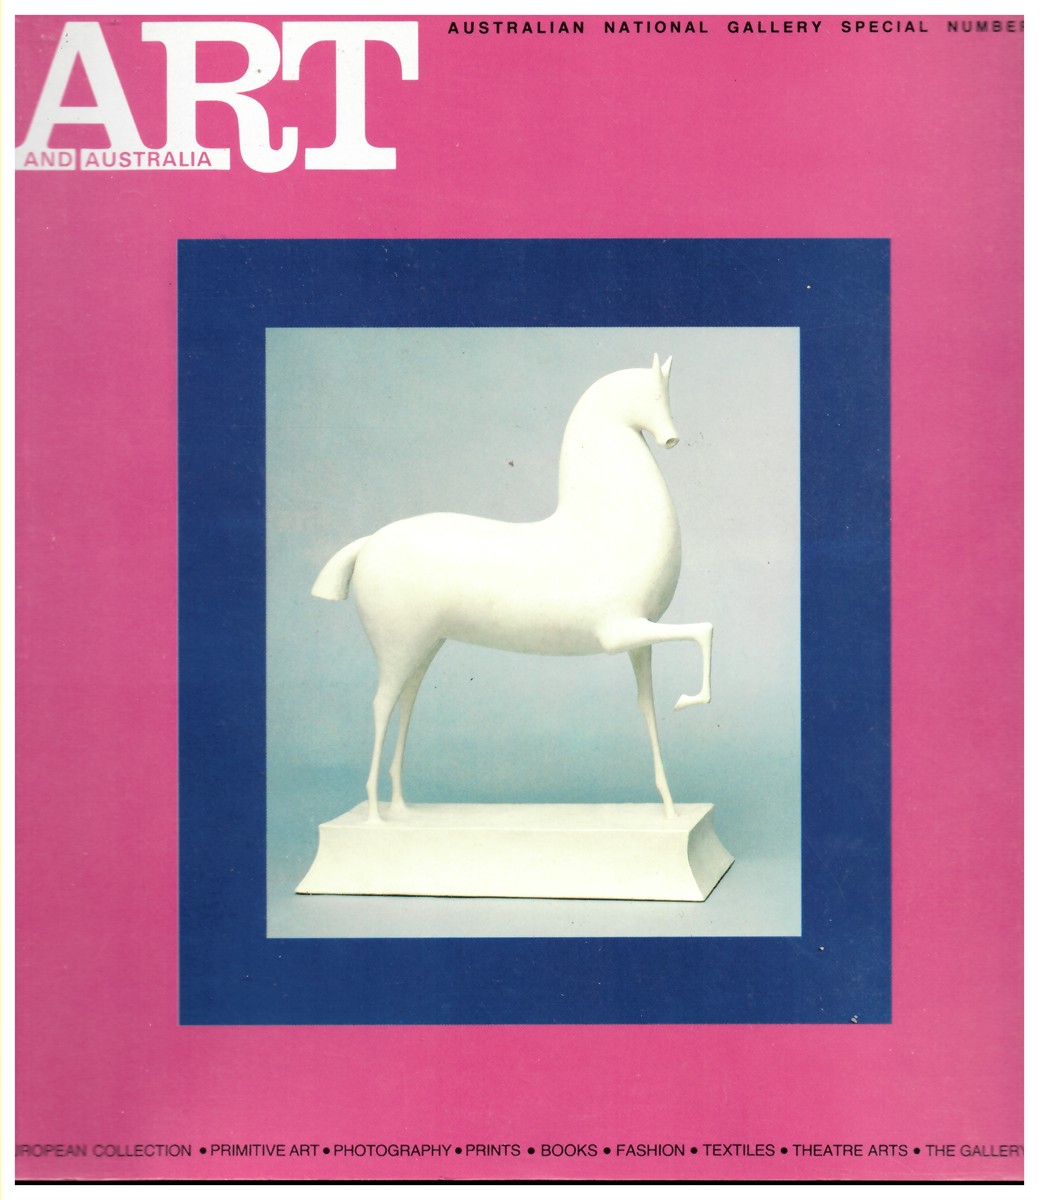 HORTON, MERVYN (EDITOR) - Art and Australia. Arts Quarterly Volume 20 Number 1 Spring 1982